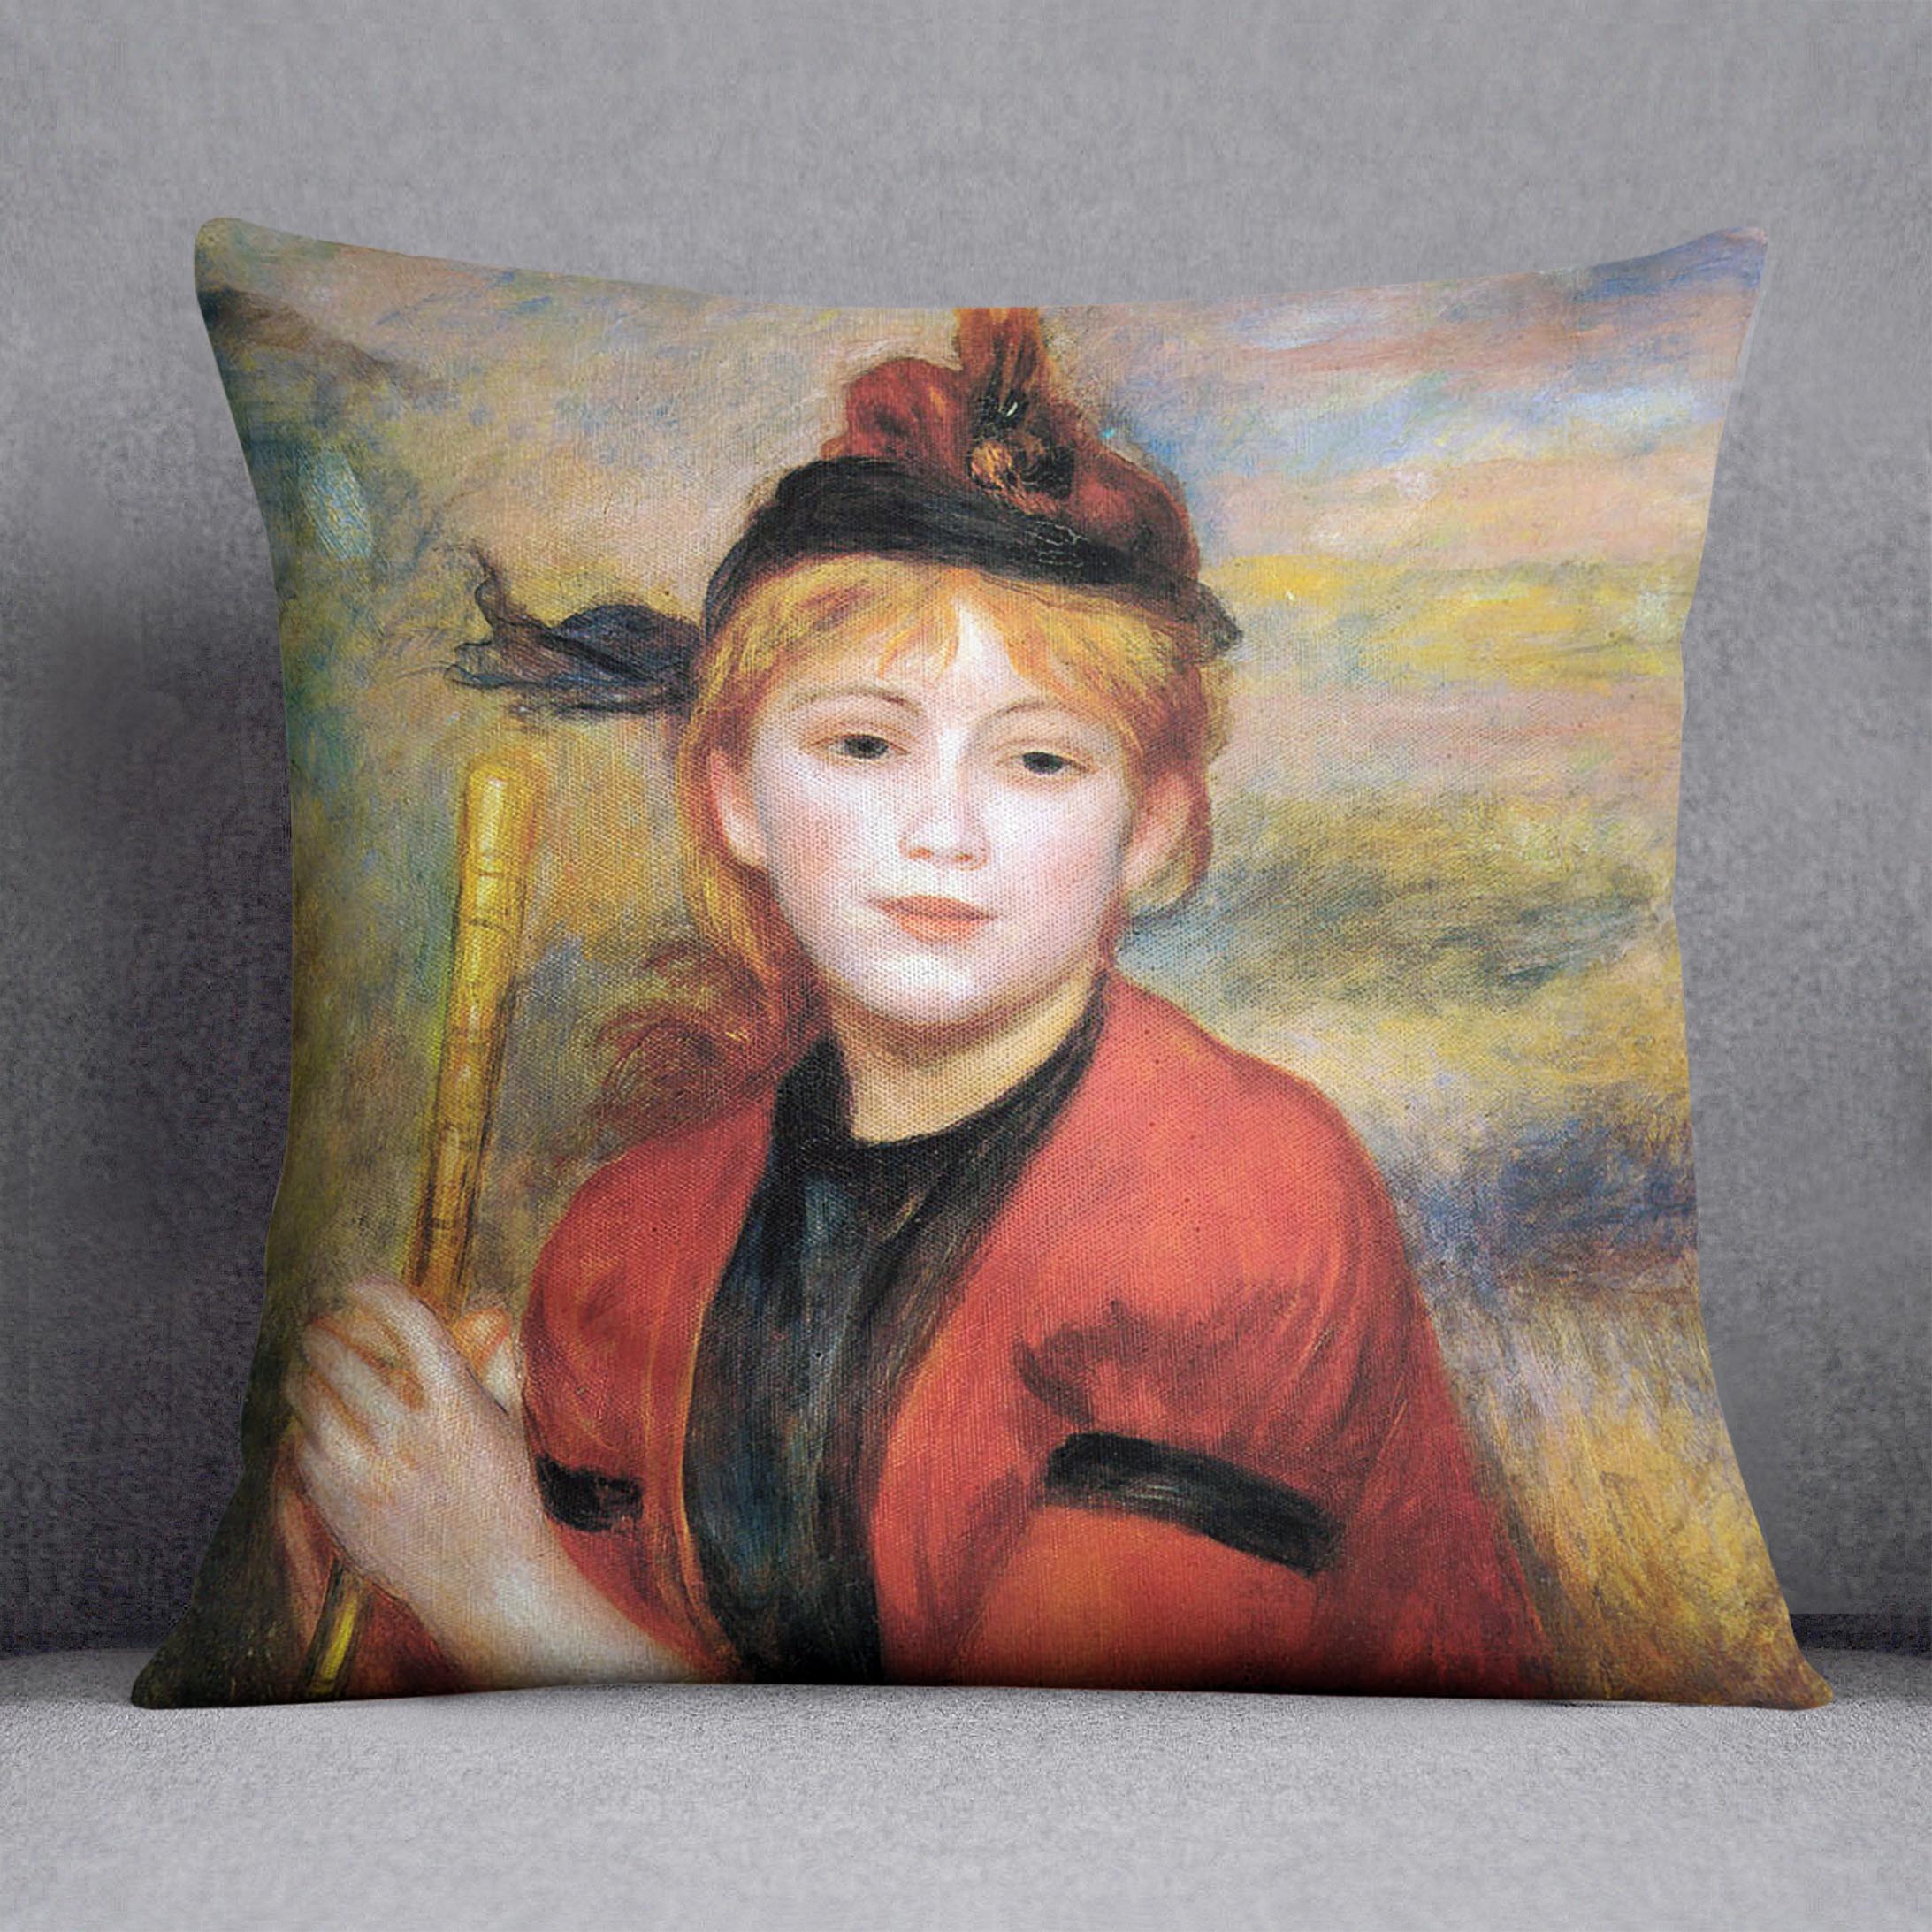 The Rambler by Renoir Cushion